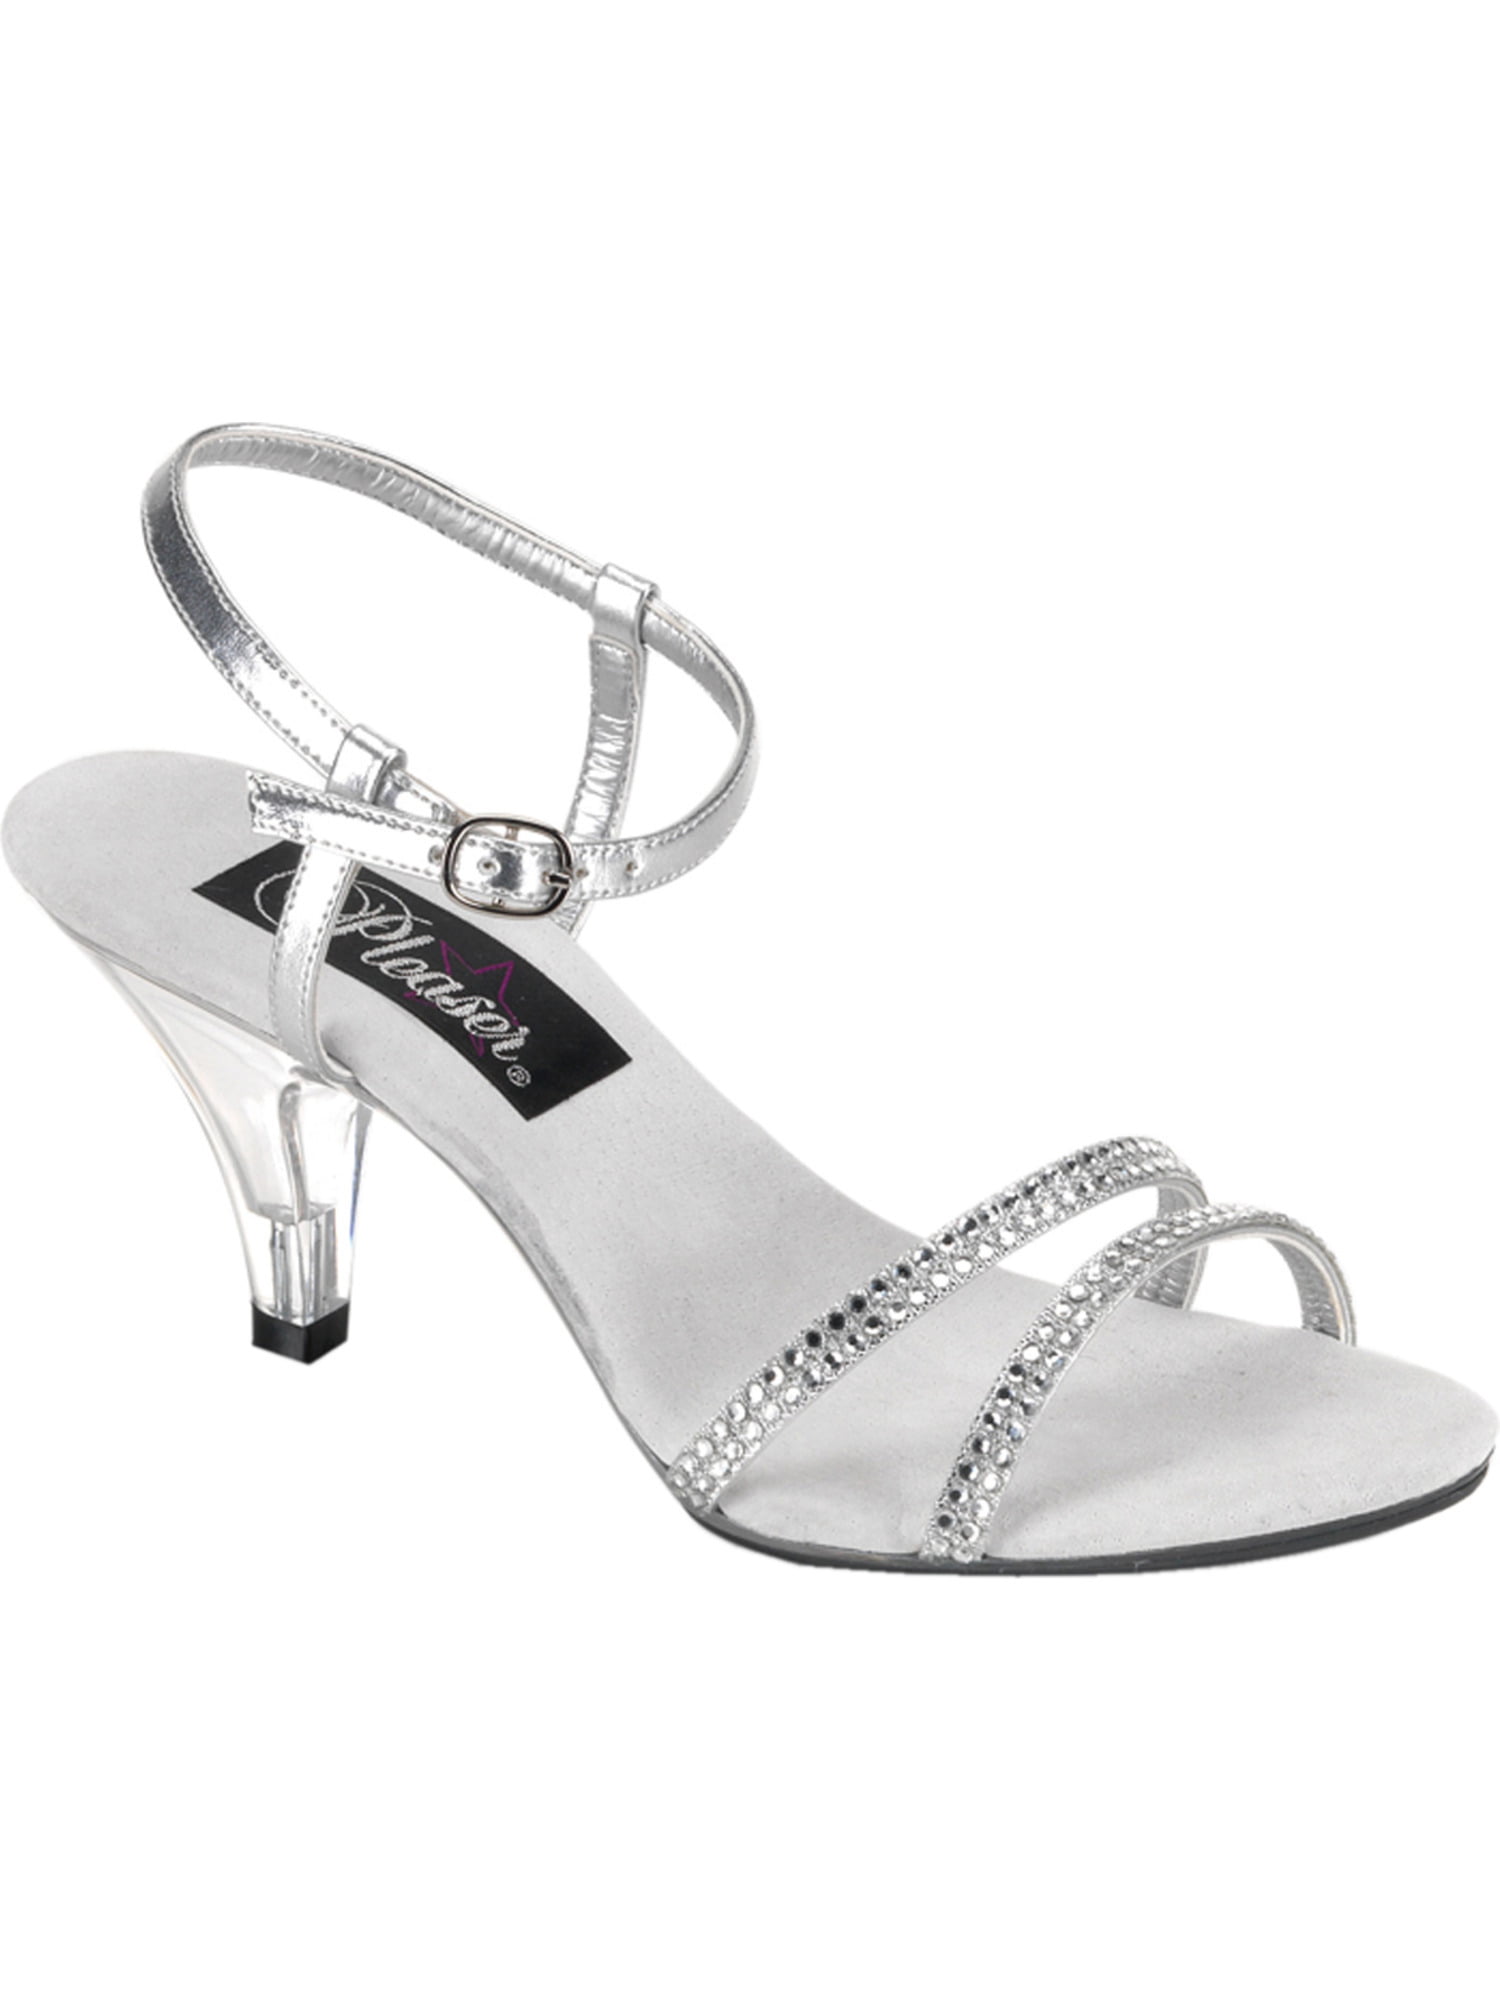 silver block heels 3 inch